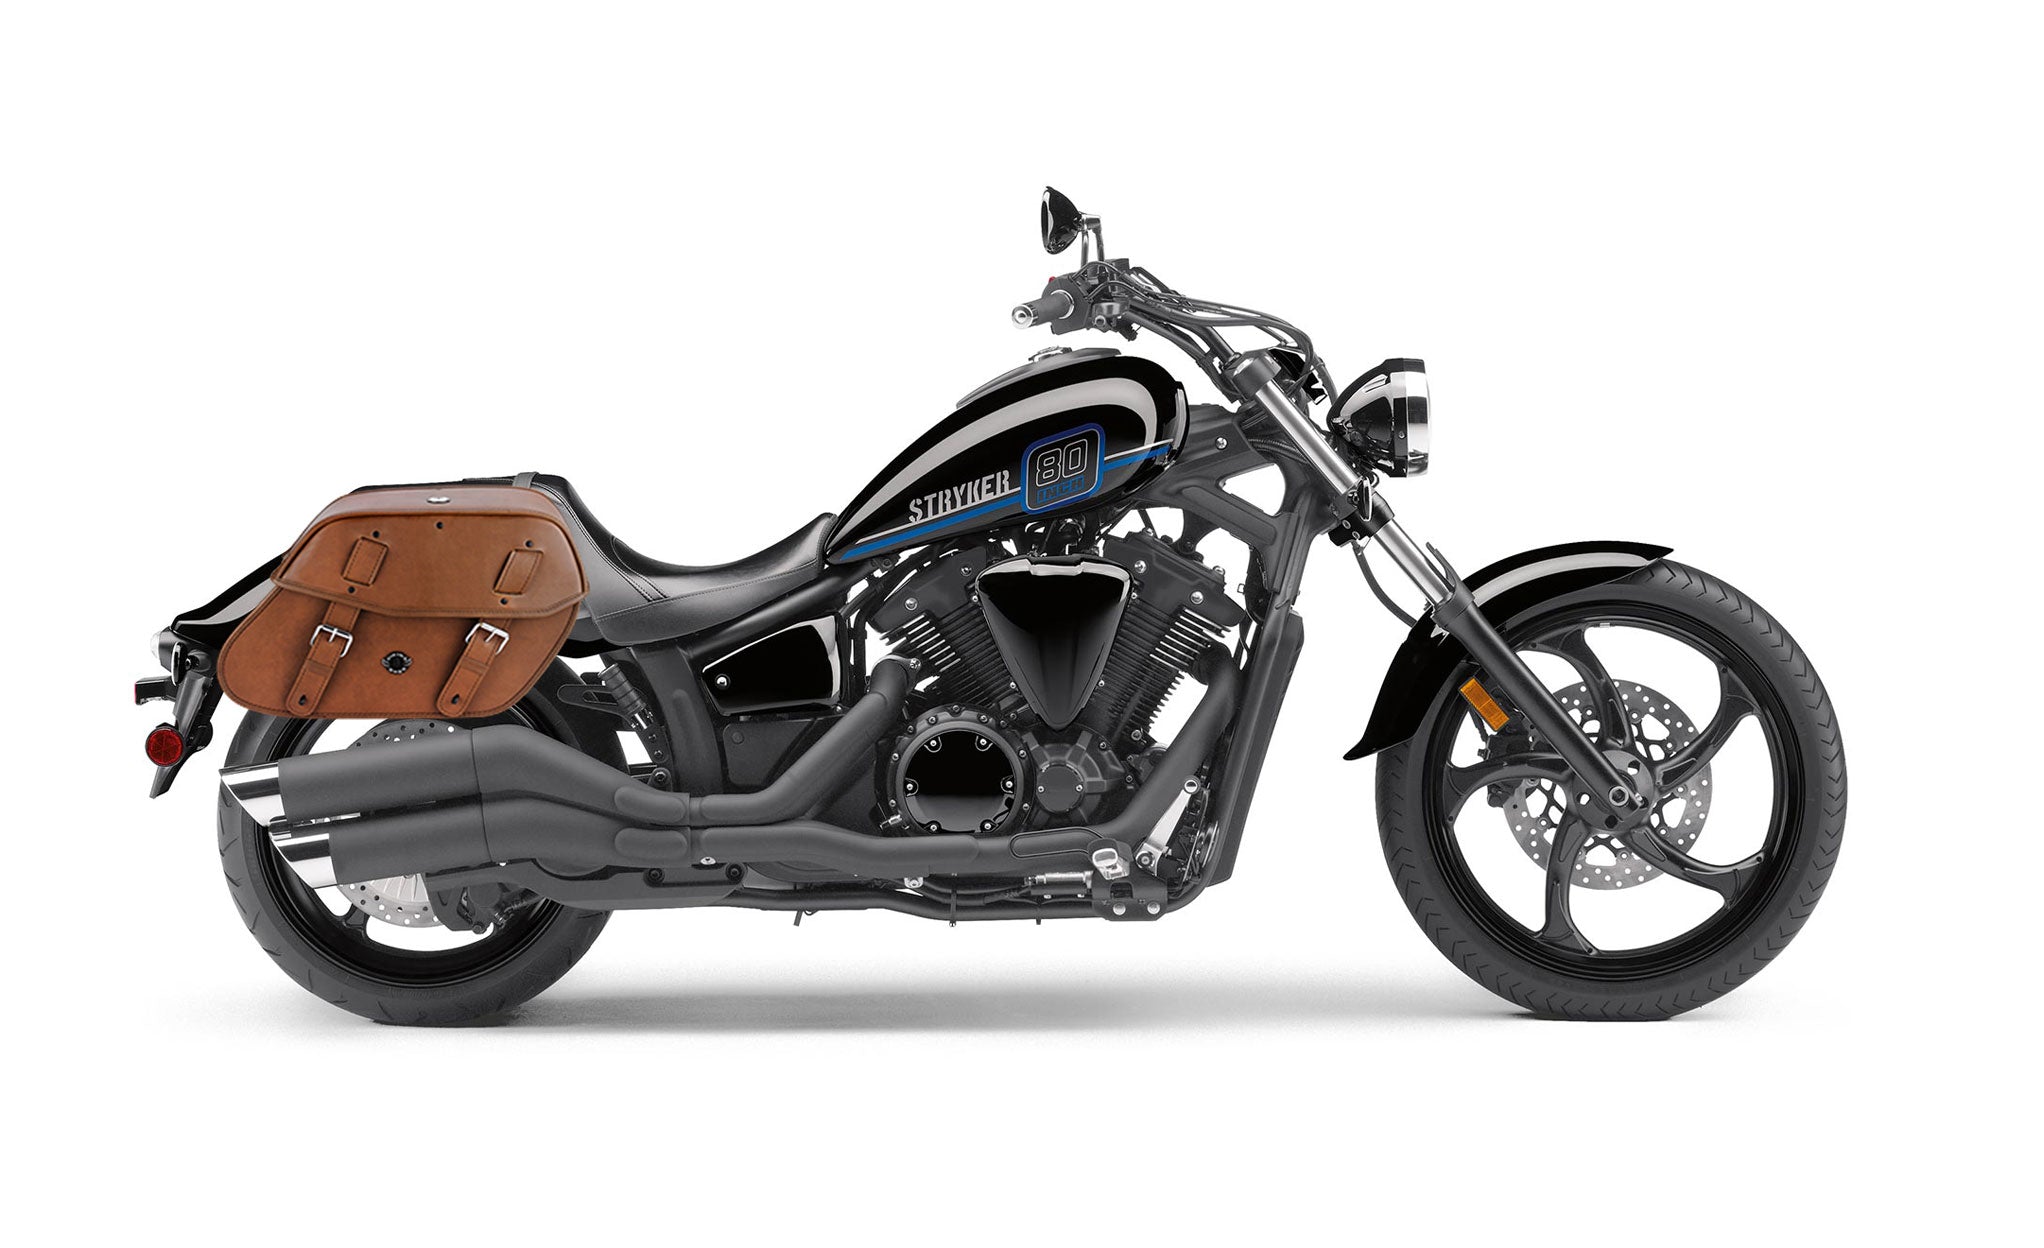 Viking Odin Brown Large Yamaha Stryker Leather Motorcycle Saddlebags on Bike Photo @expand